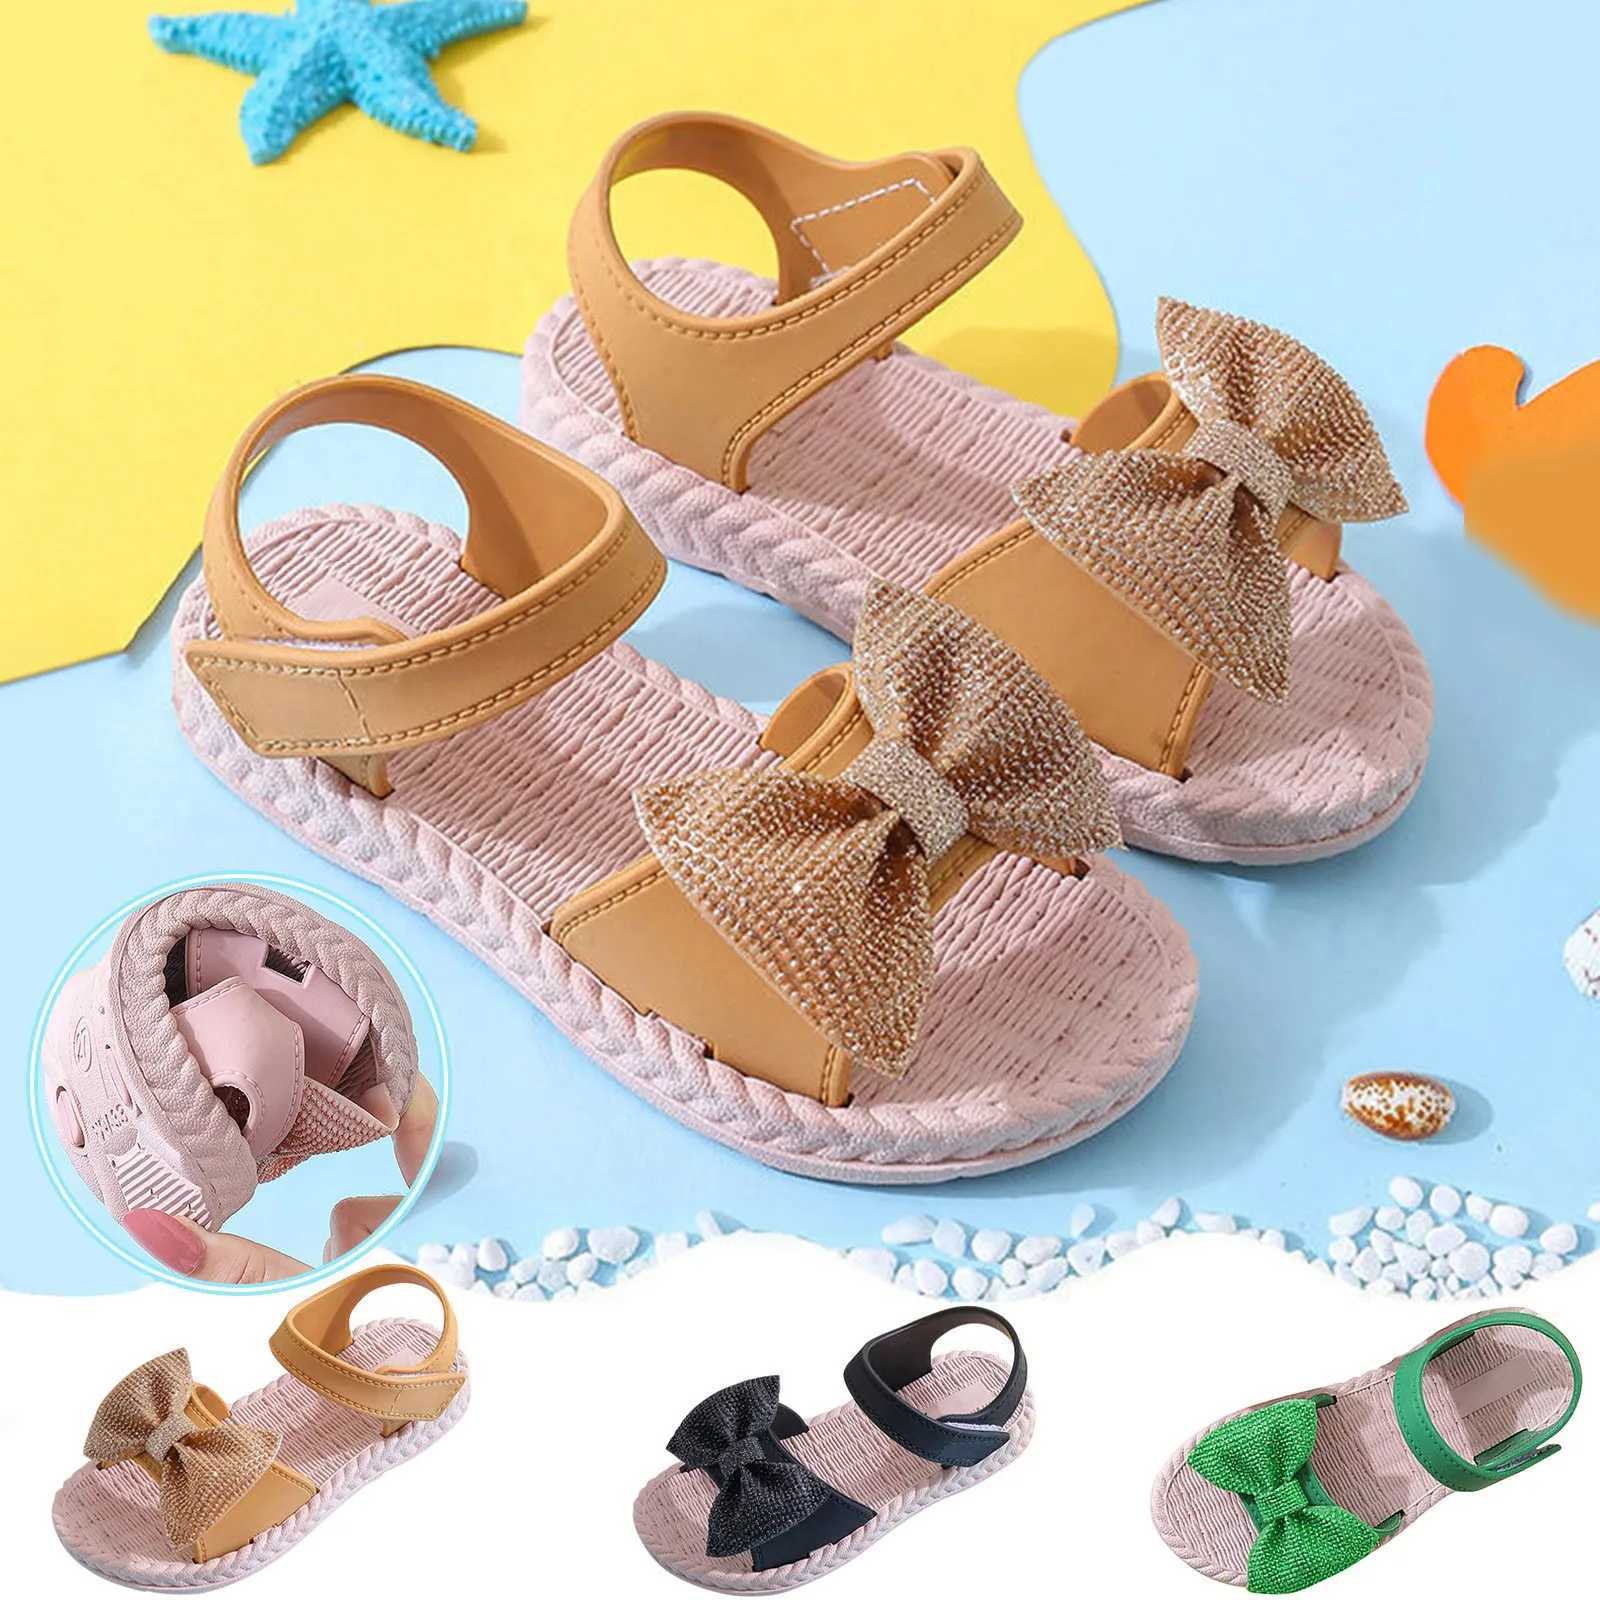 Slipper flickor sandaler sommar söt söt bowknot prinsessor skor sandaler avslappnad bekväm andlig mjuk botten strand barnskor skor2425